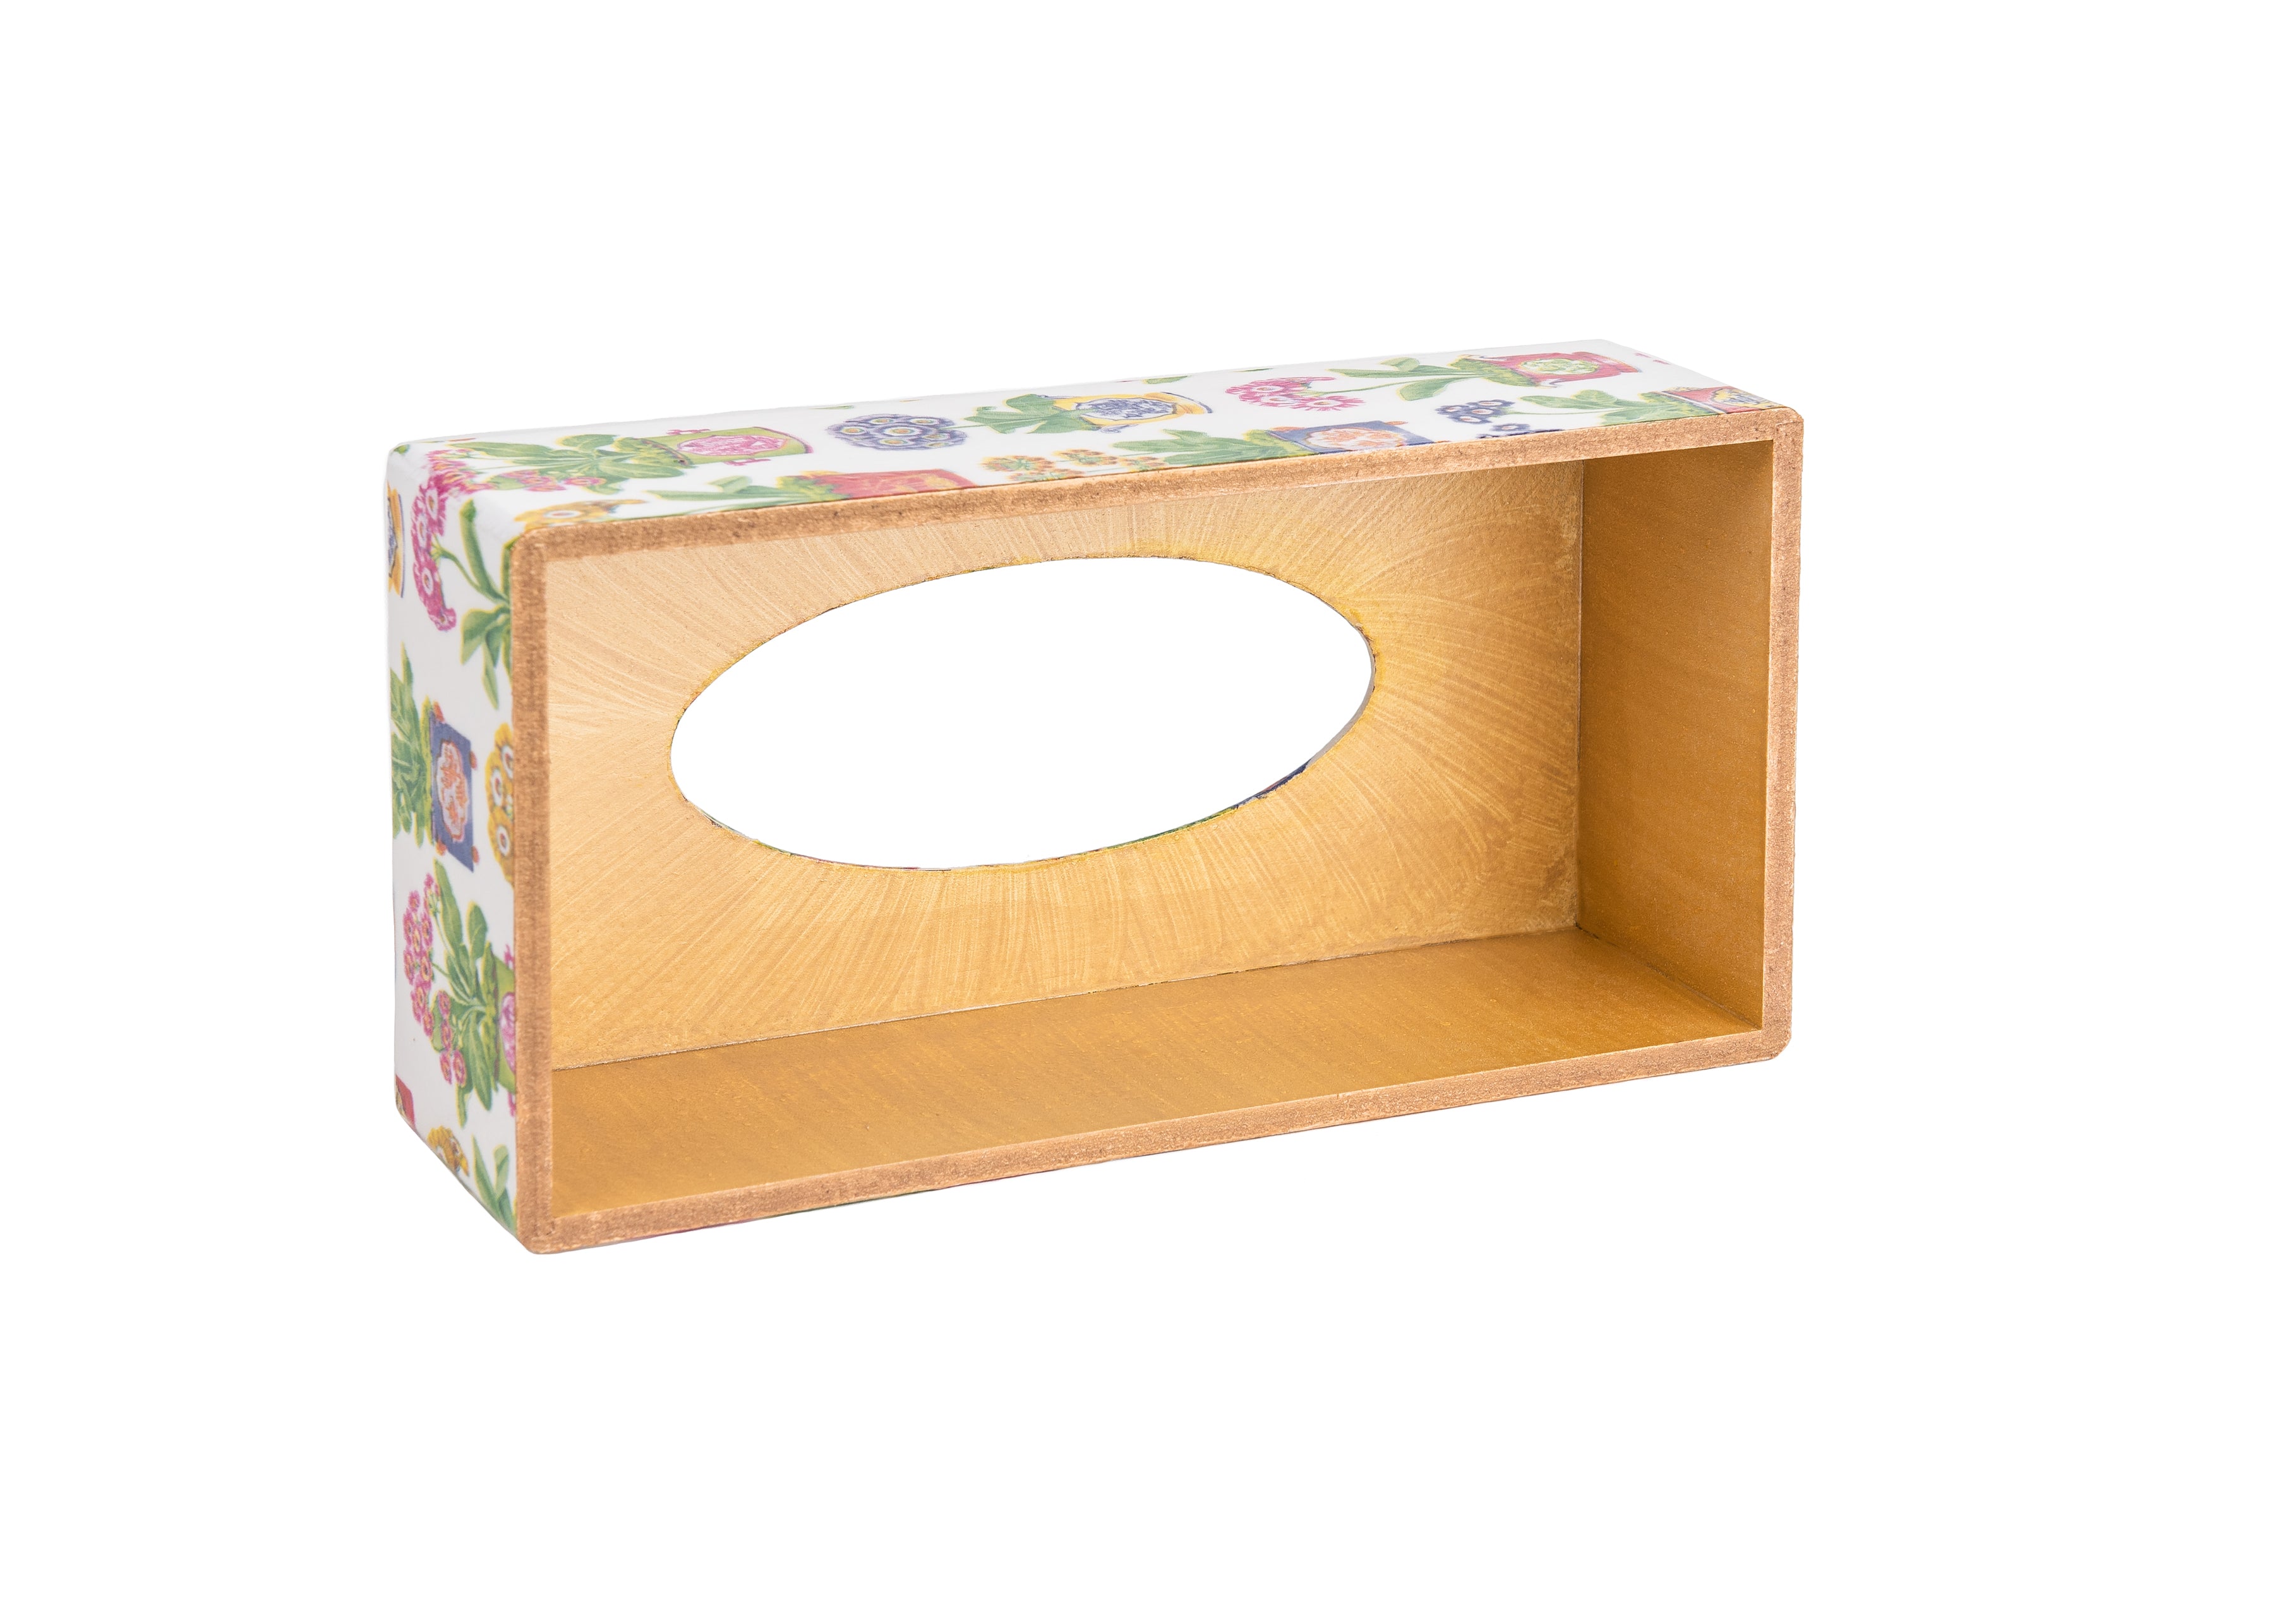 Tilda Beige Rectangle Tissue Box Cover